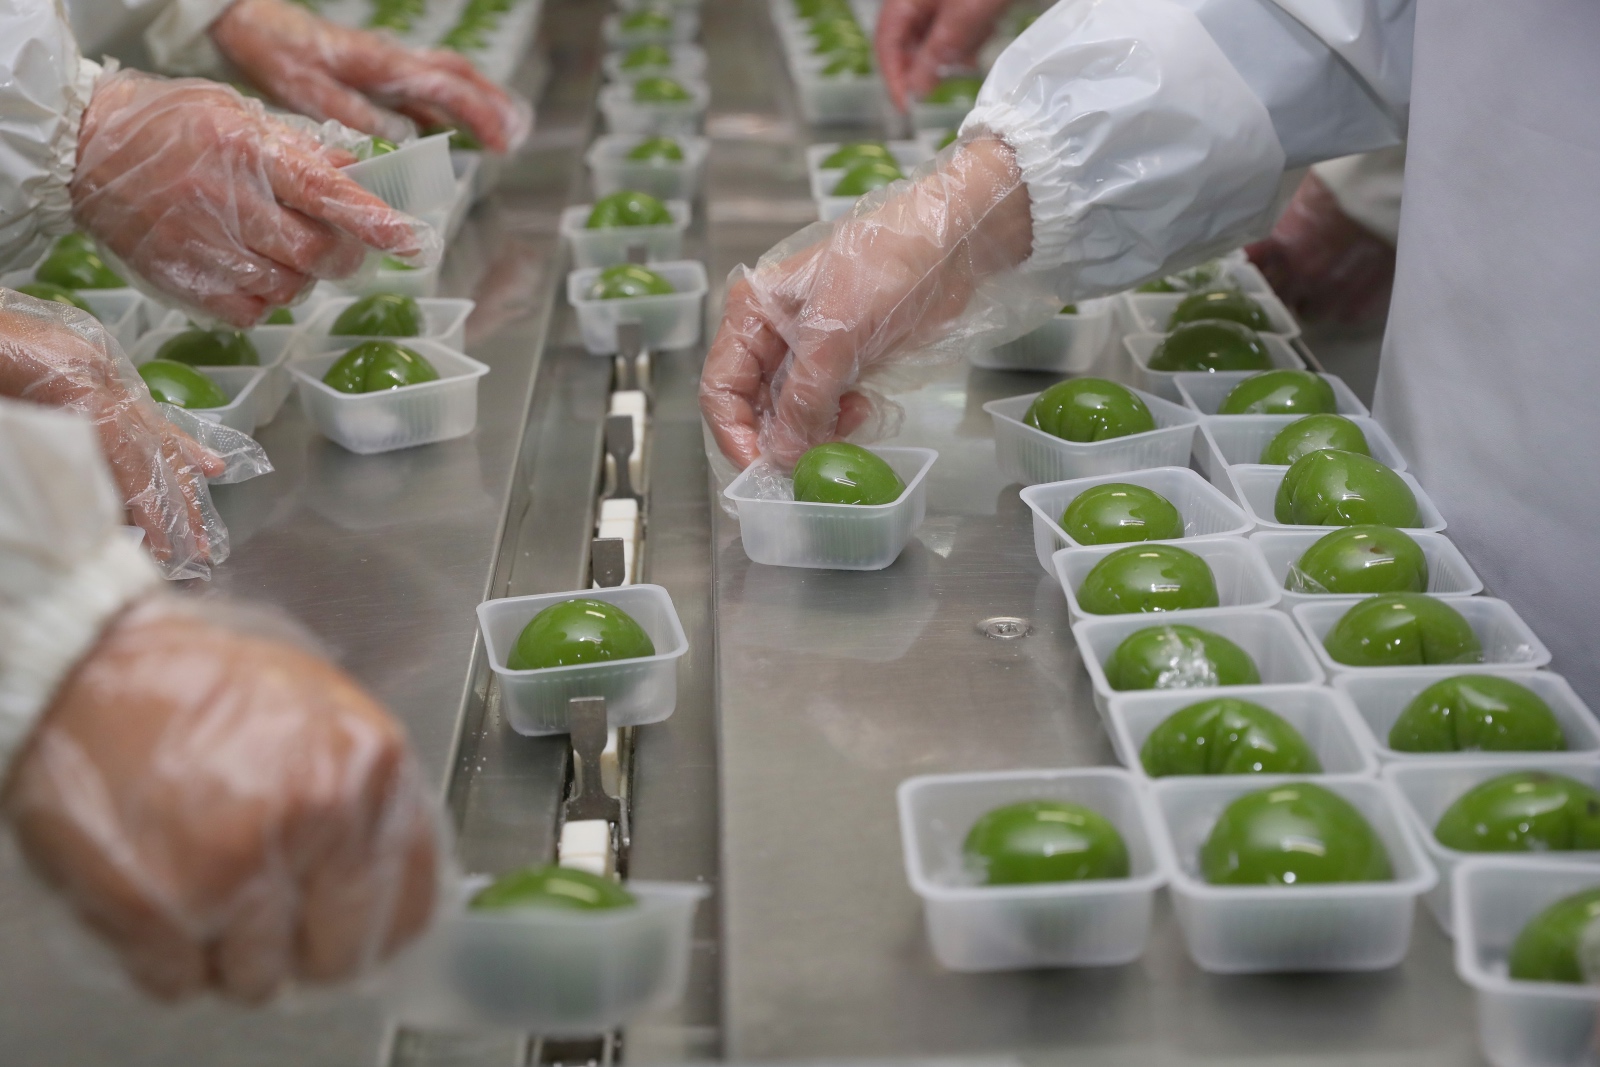 Green dumplings on an assembly line